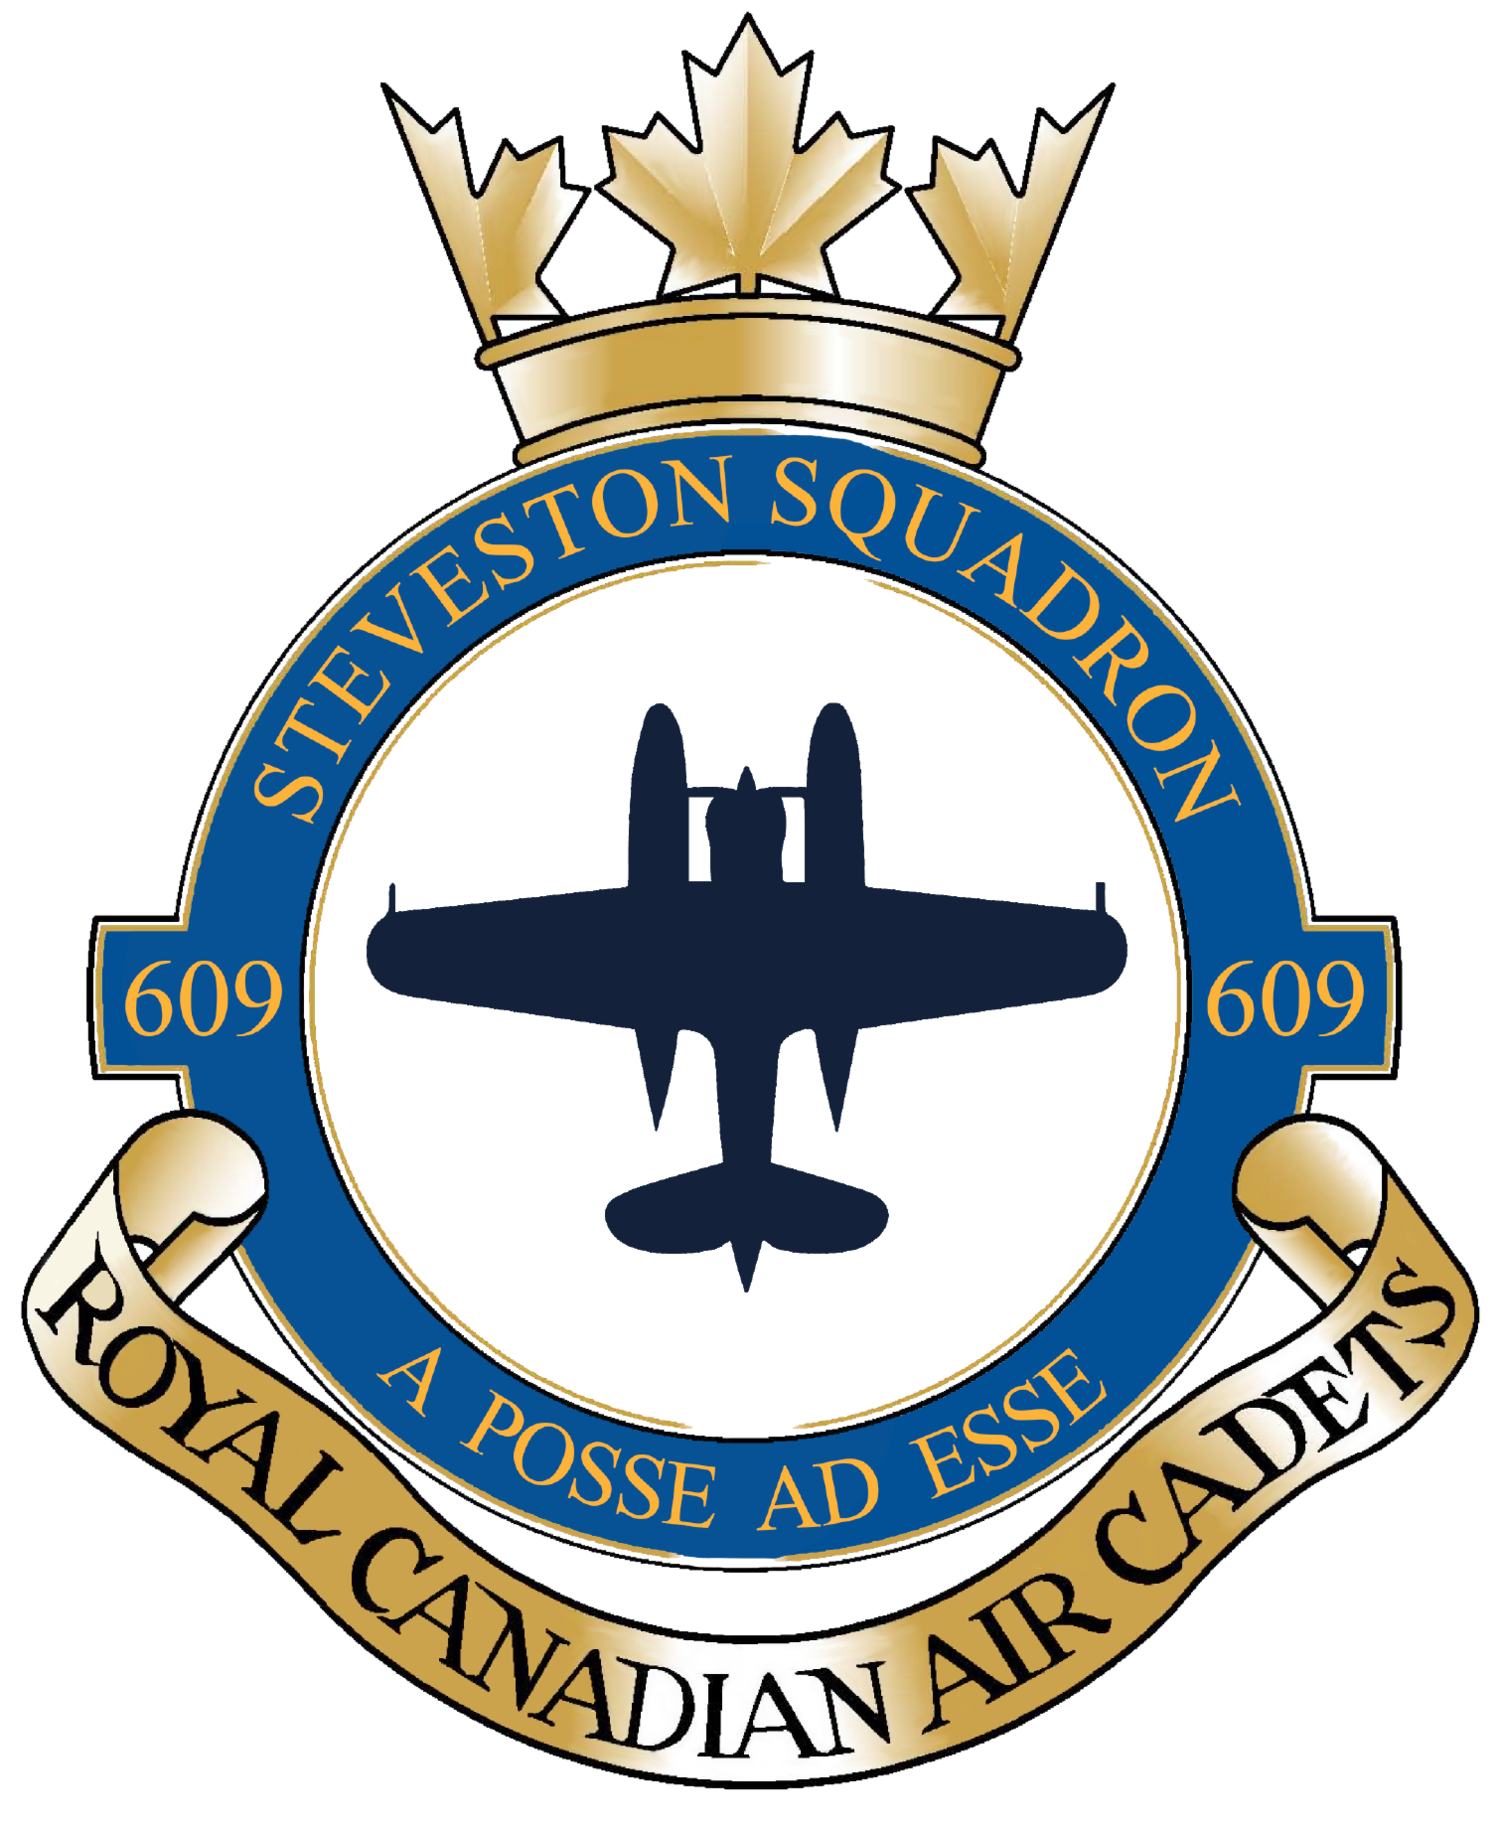 609 Steveston Squadron